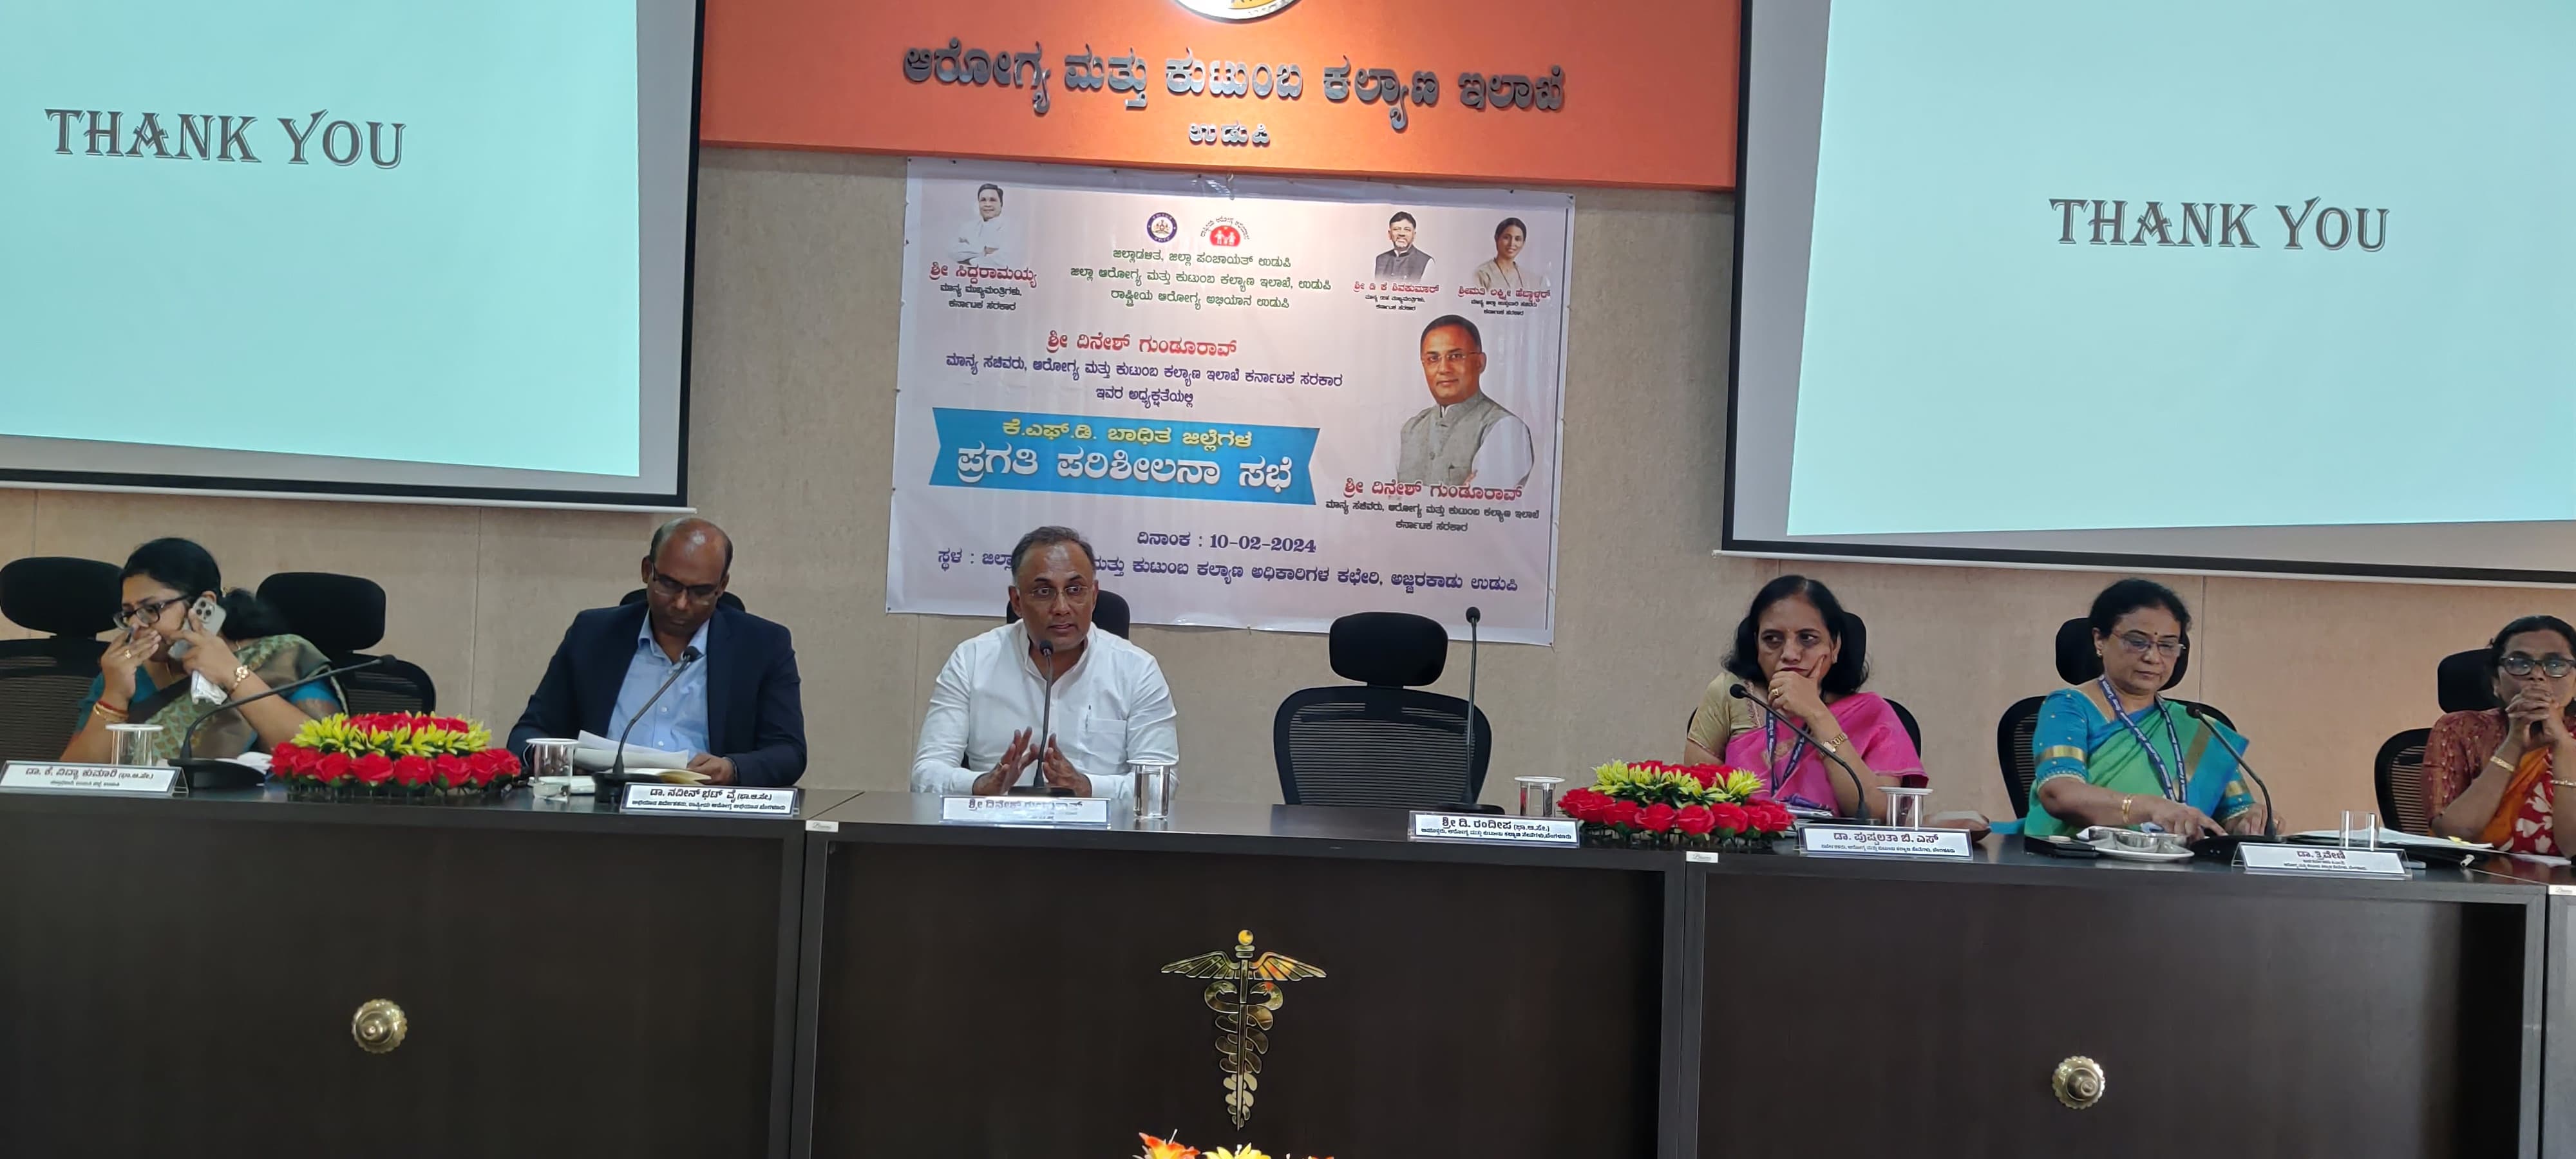 ICMR Working on Vaccine for Monkey Fever: Karnataka Health Minister - Deccan Chronicle